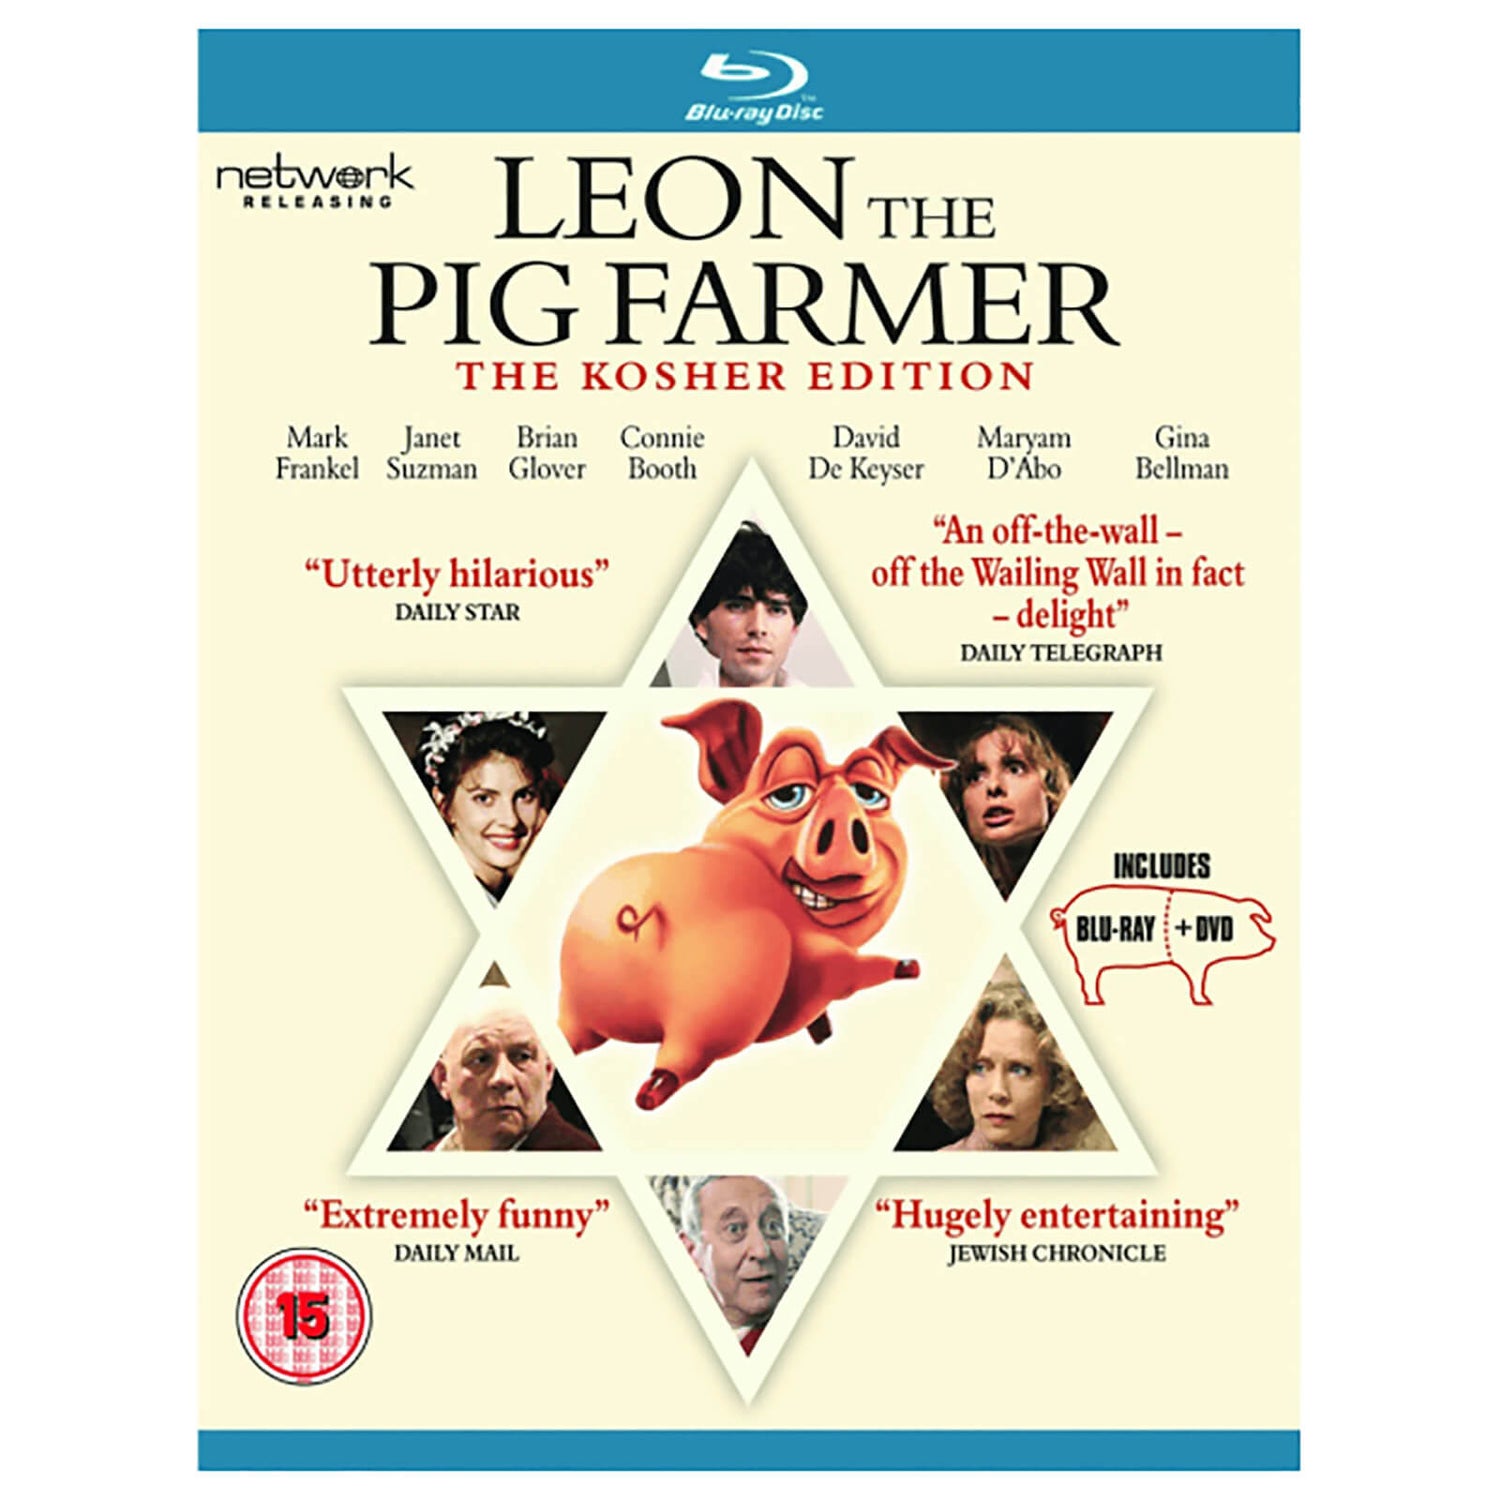 Leon The Pig Farmer: The Kosher Edition